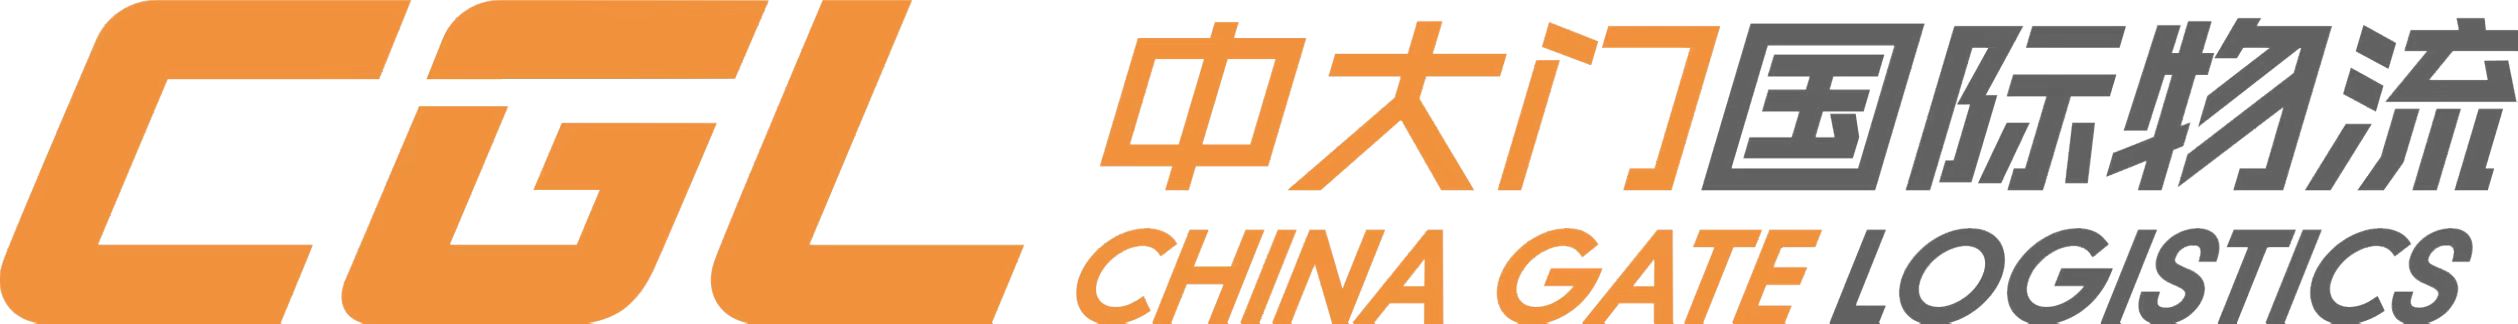 China Gate Logistics Co., Ltd Logo